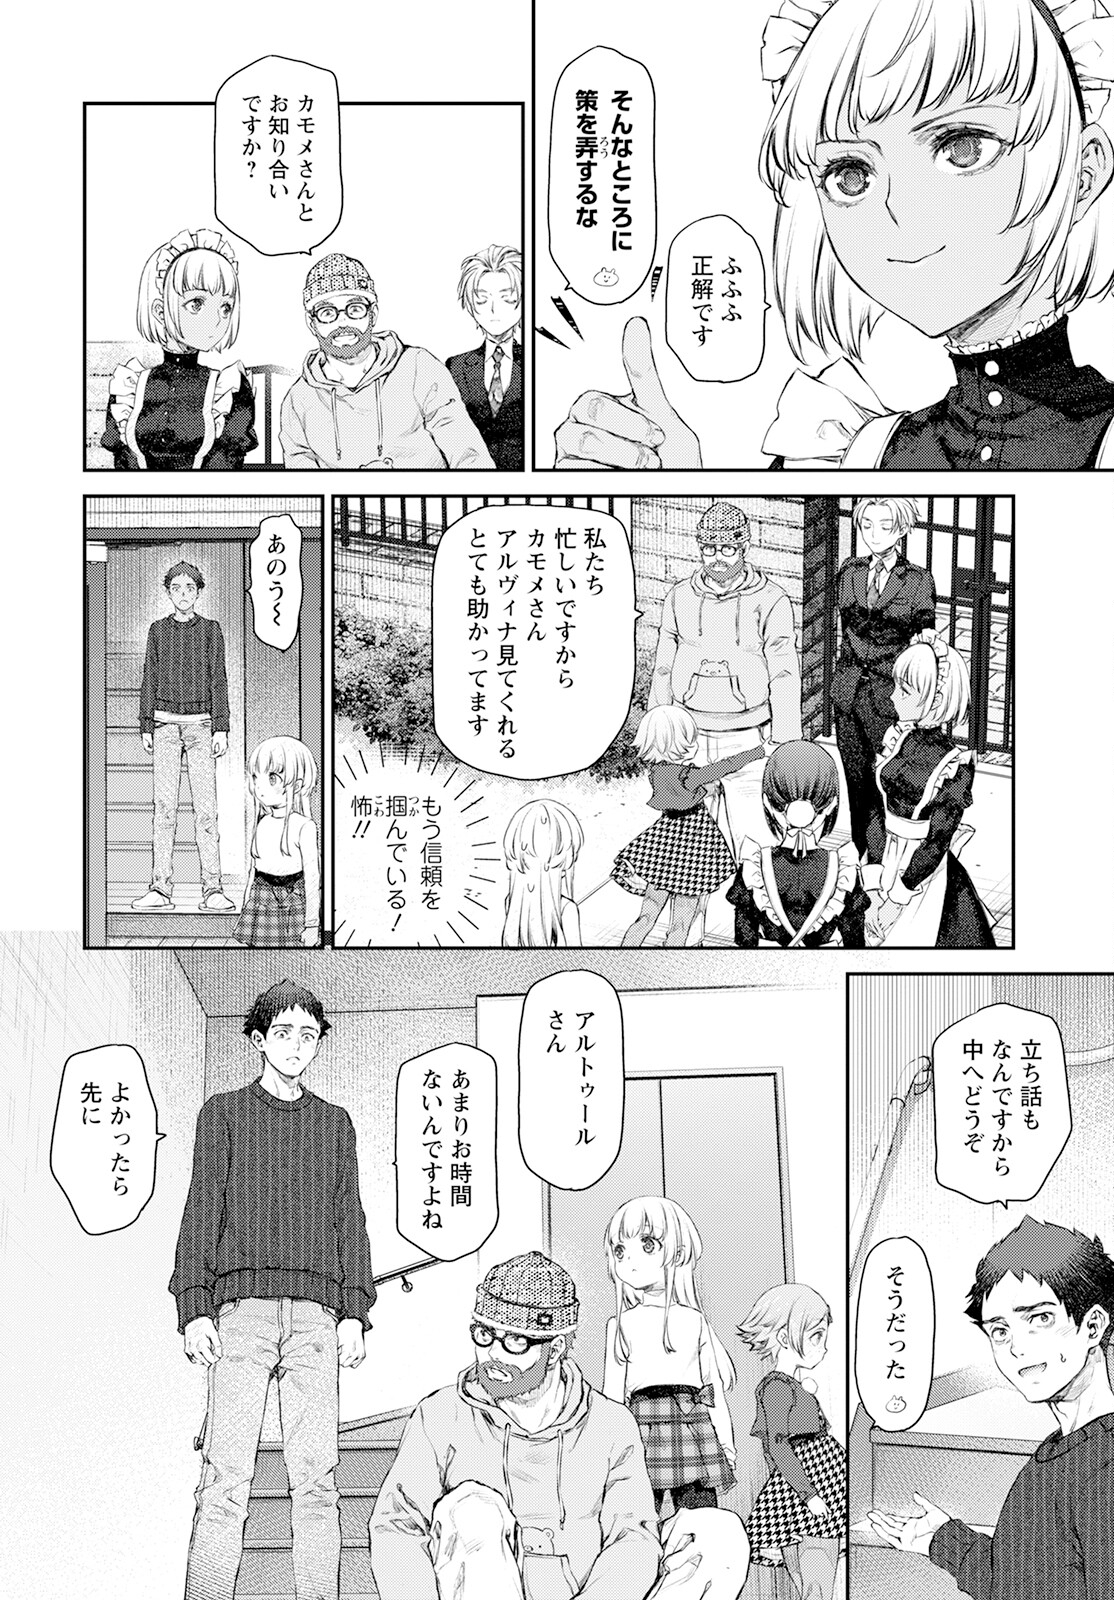 Uchi no Maid ga Uzasugiru! - Chapter 57 - Page 14